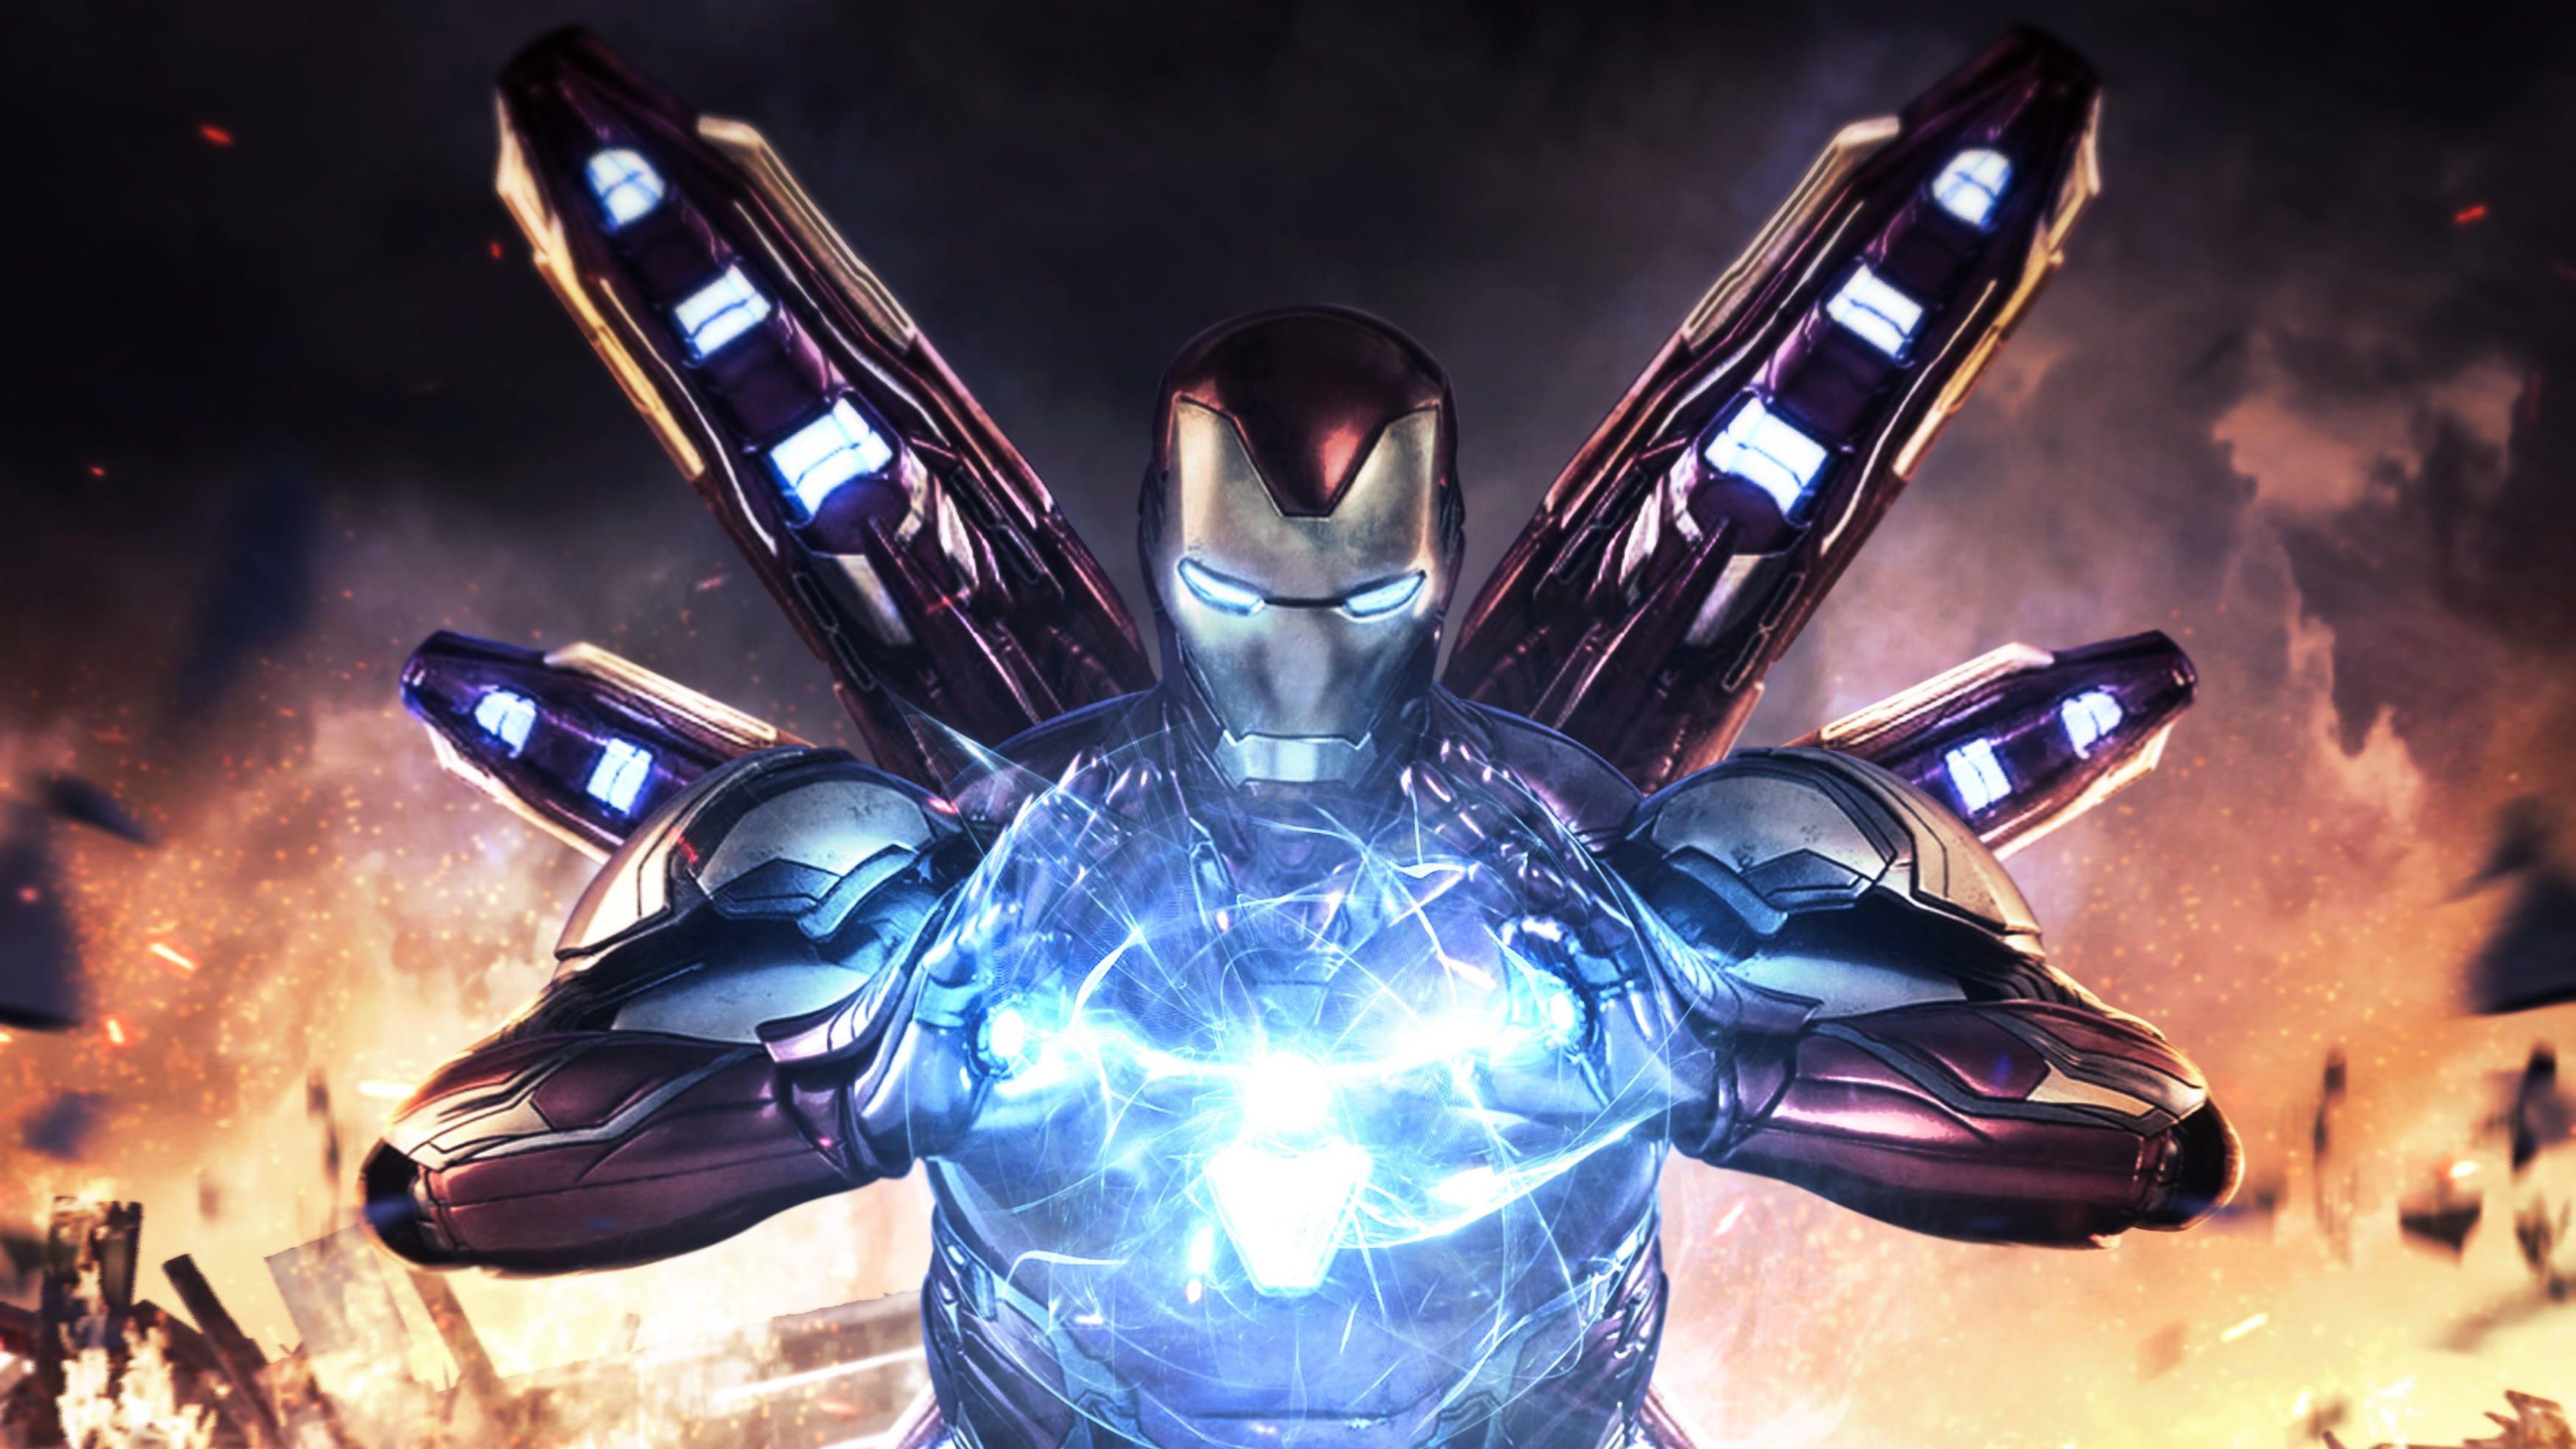 3500x1969 Iron Man Avengers Endgame 4k Hd Superheroes 4k Wallpaper Image